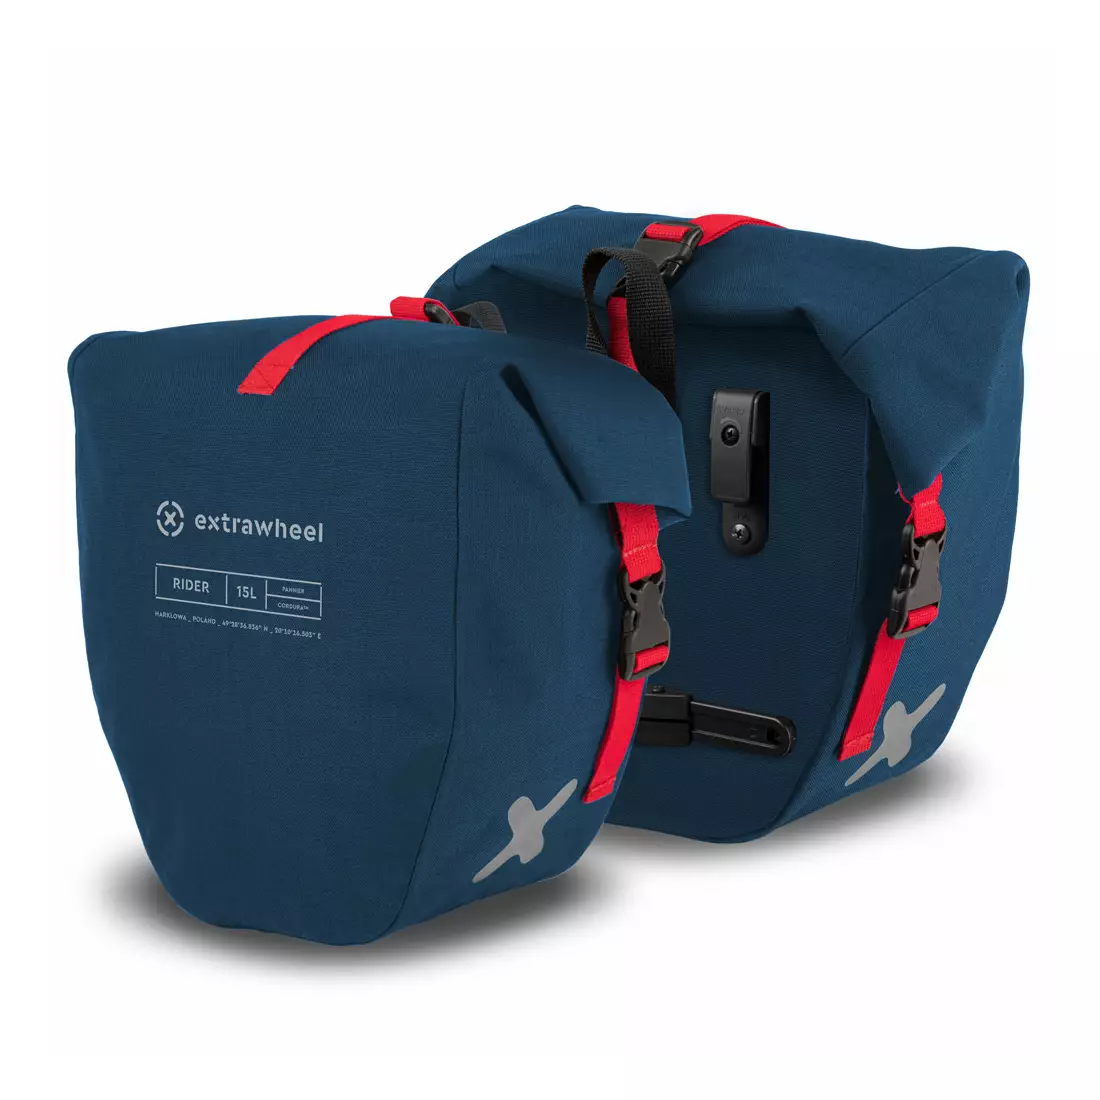 EXTRAWHEEL RIDER PREMIUM CORDURA brašna na kolo na nosič zavazadel, modrá 2x15 L